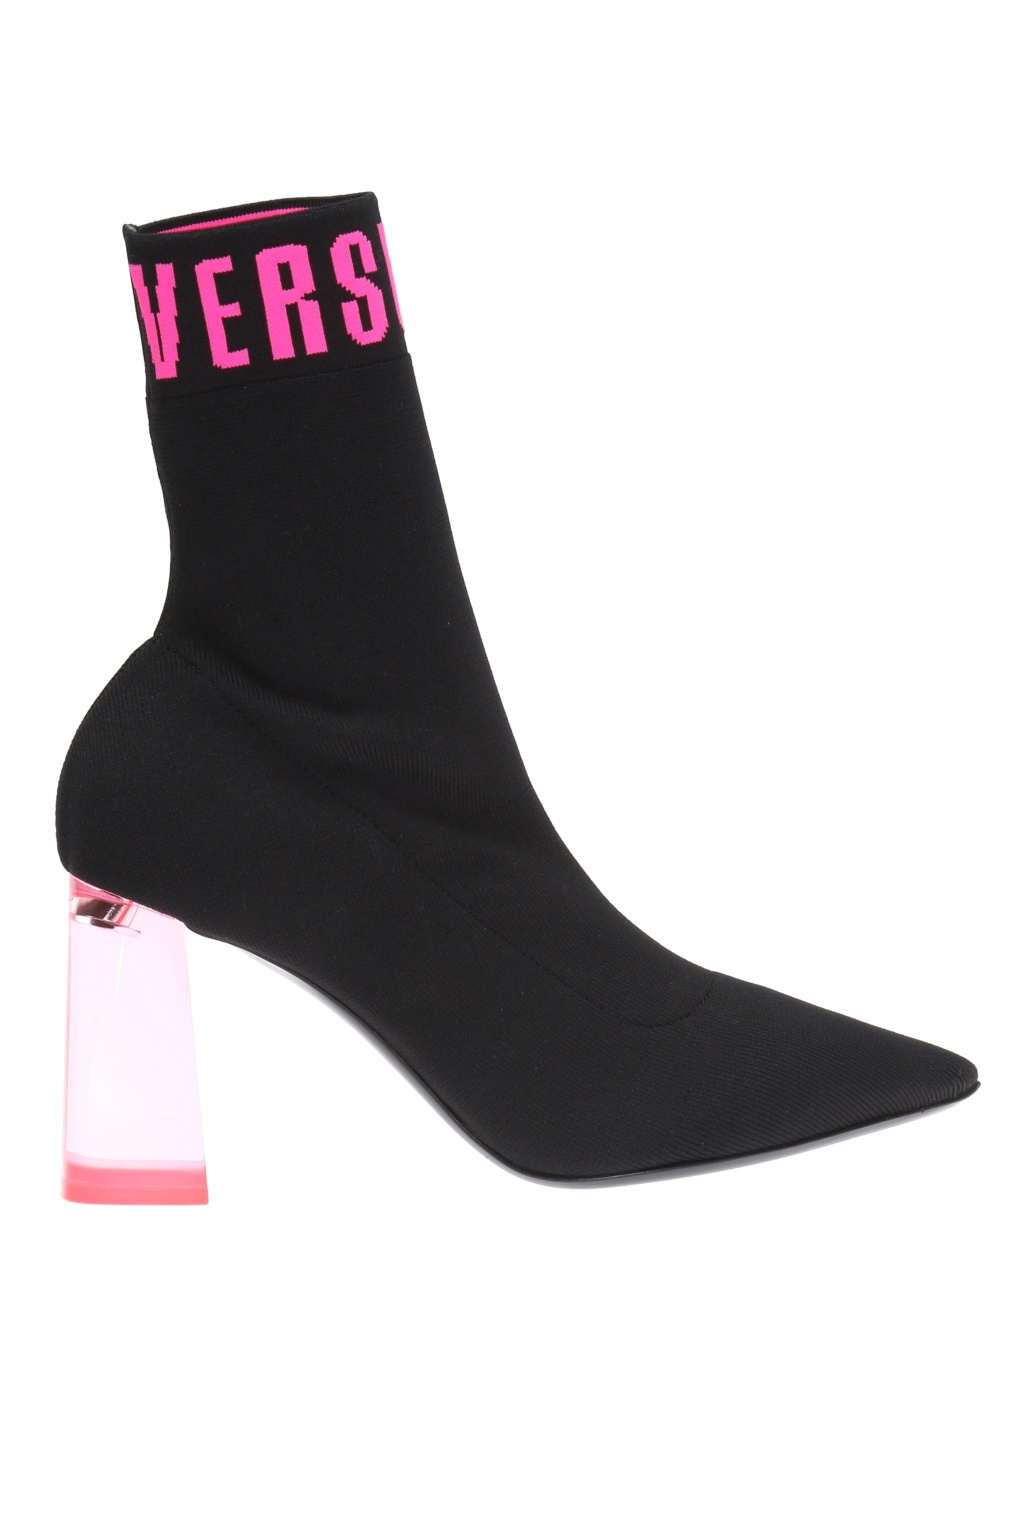 versus versace ankle boots